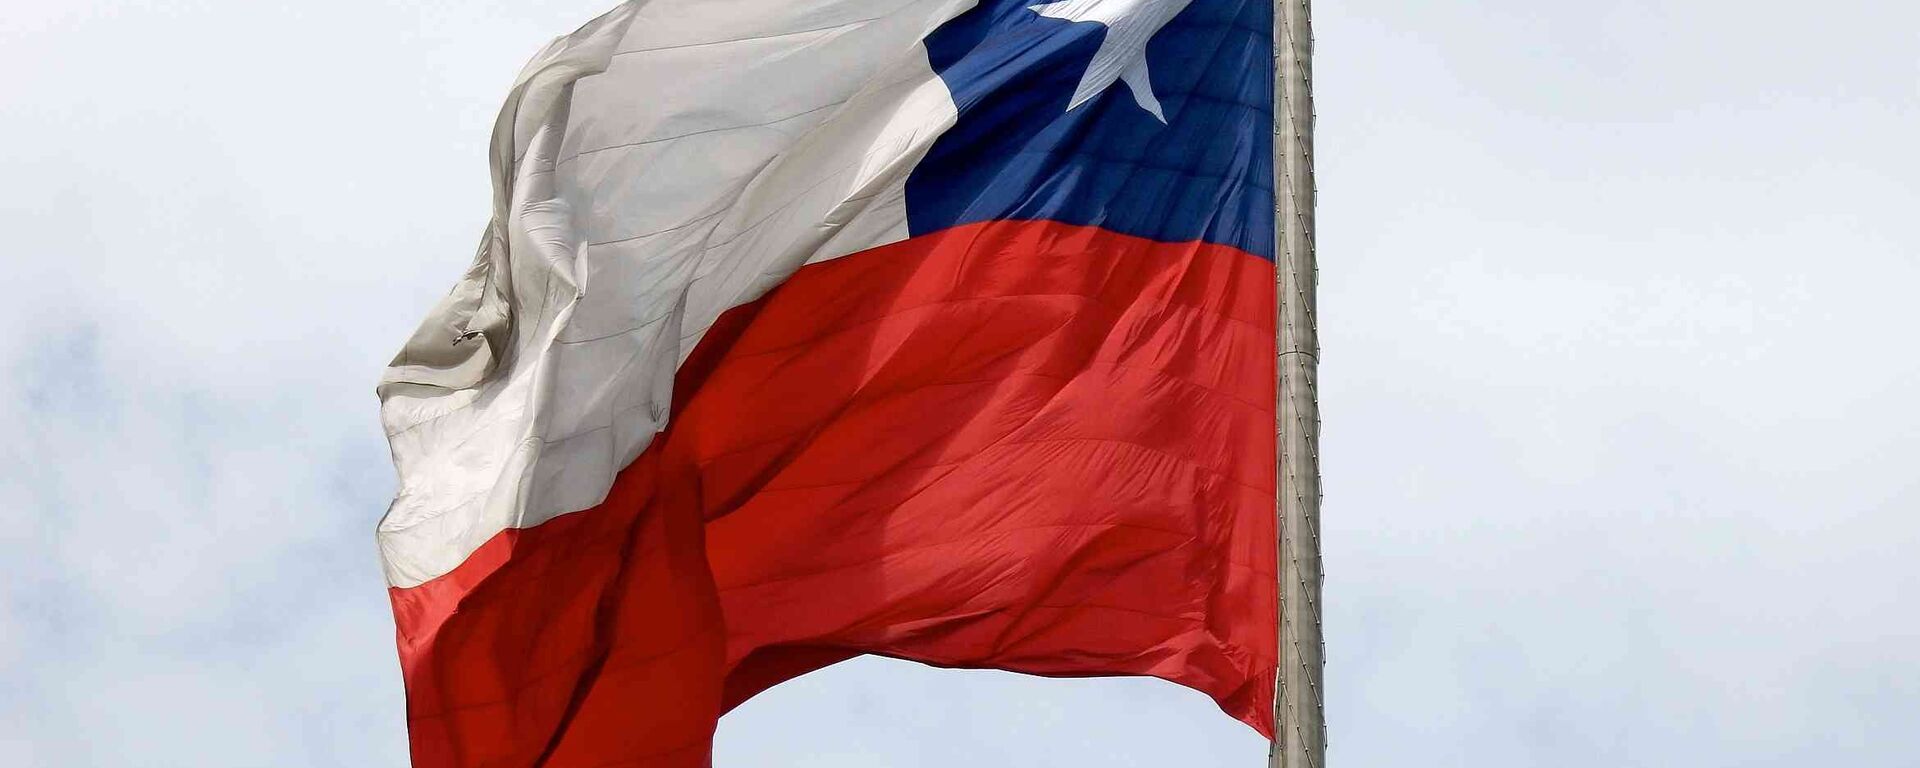 Bandera de Chile - Sputnik Mundo, 1920, 09.08.2021